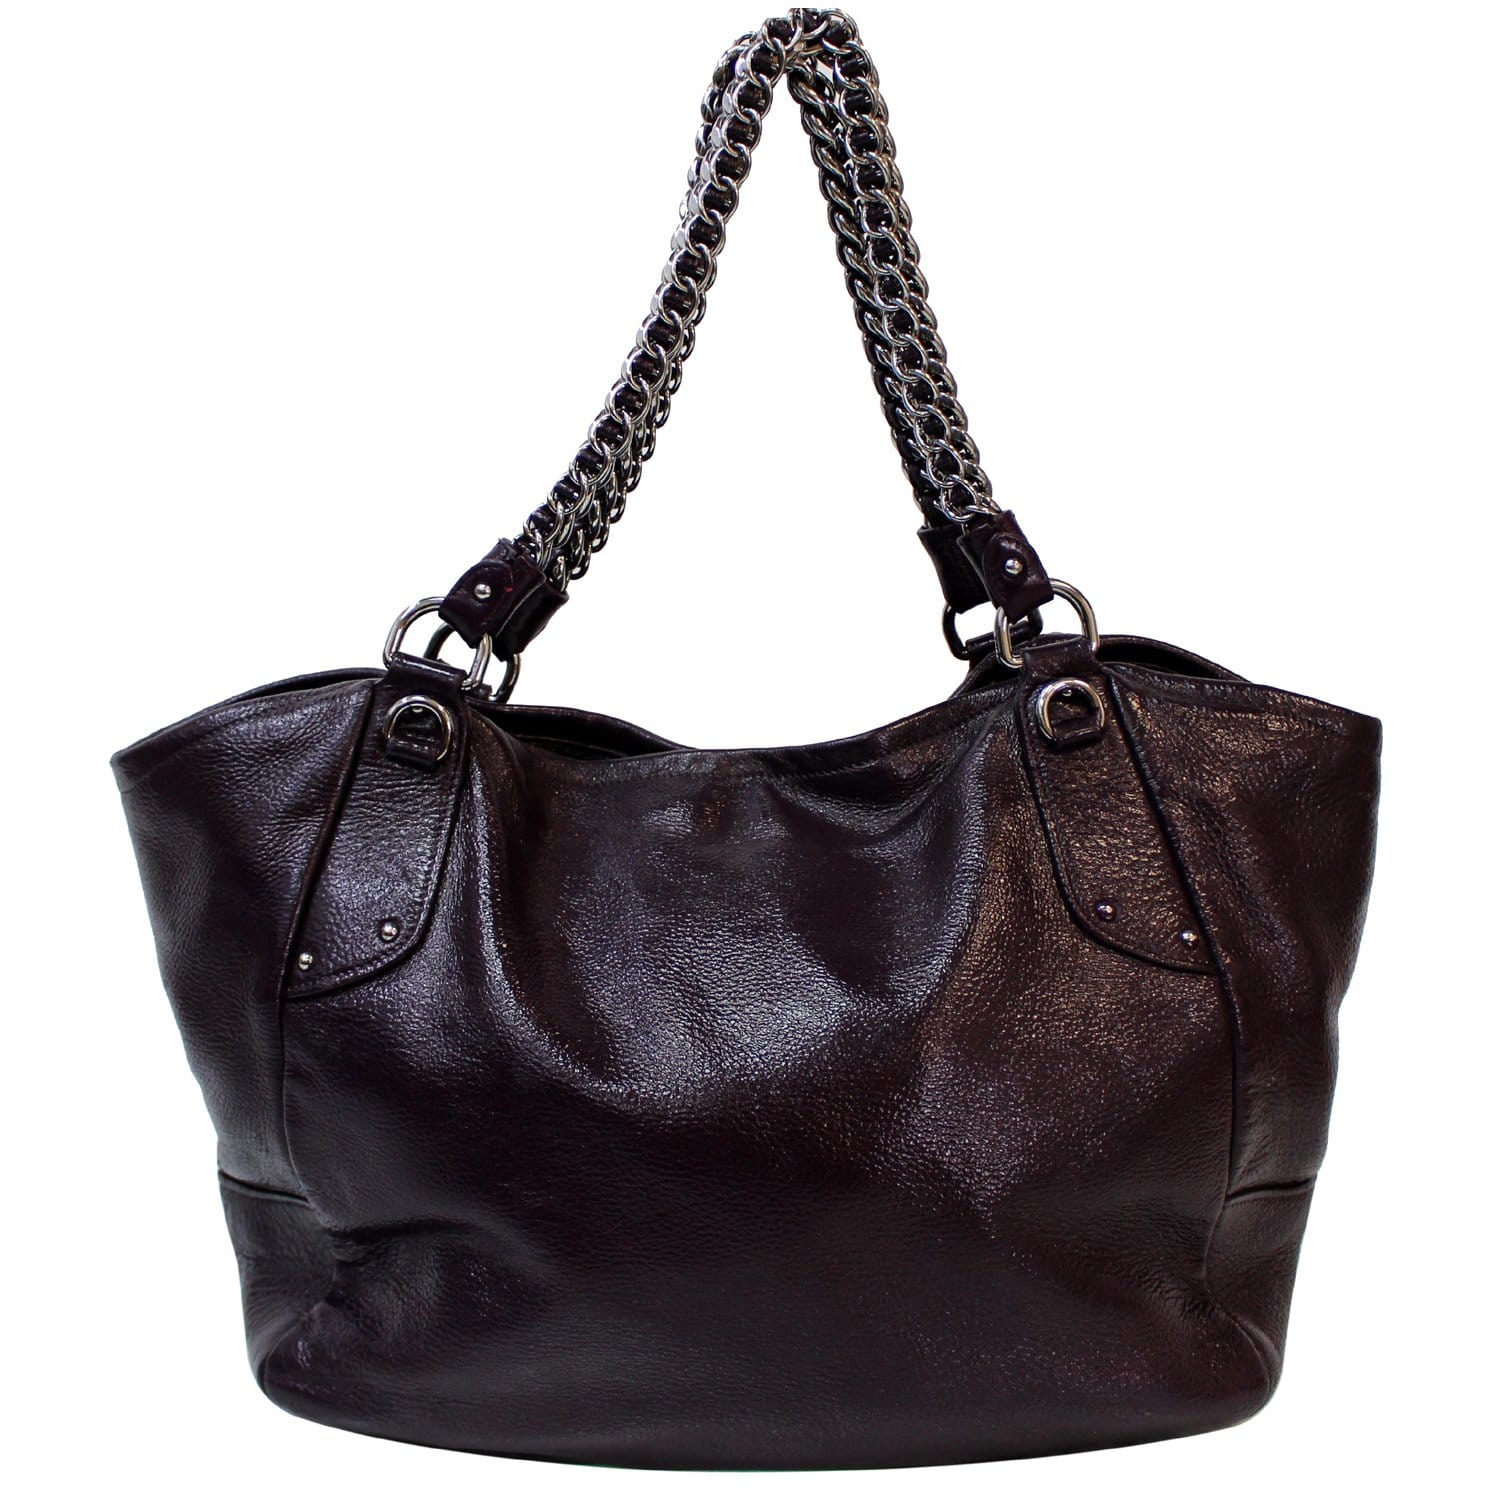 Authentic PRADA CERVO LUX Leather Chain Shoulder Tote Bag BR4242